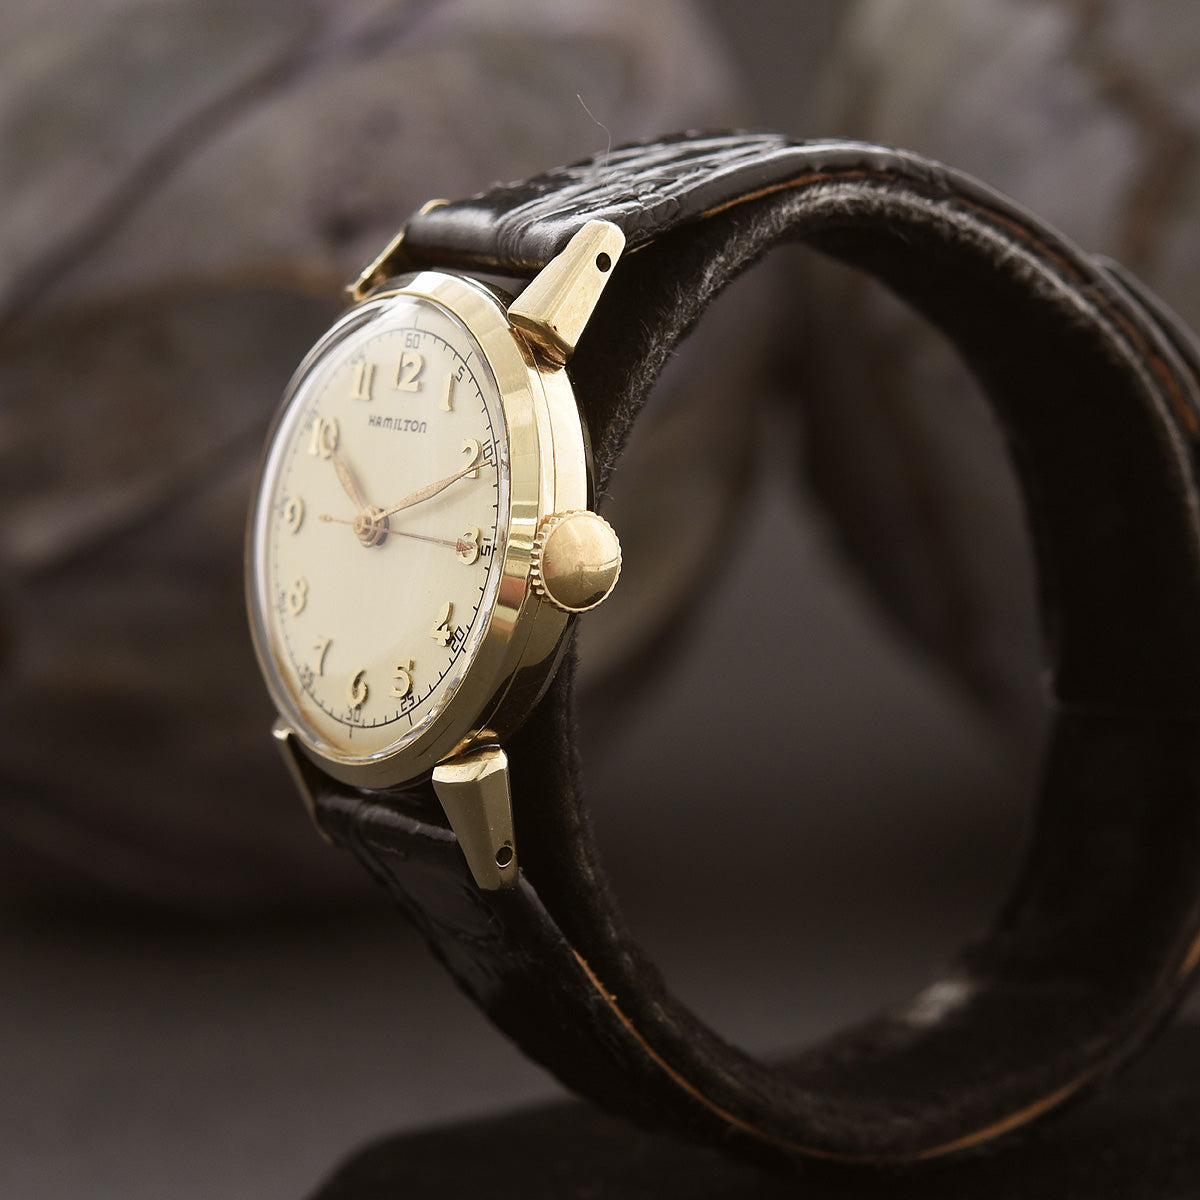 1950 HAMILTON USA 'Secometer B' Gents Dress Watch